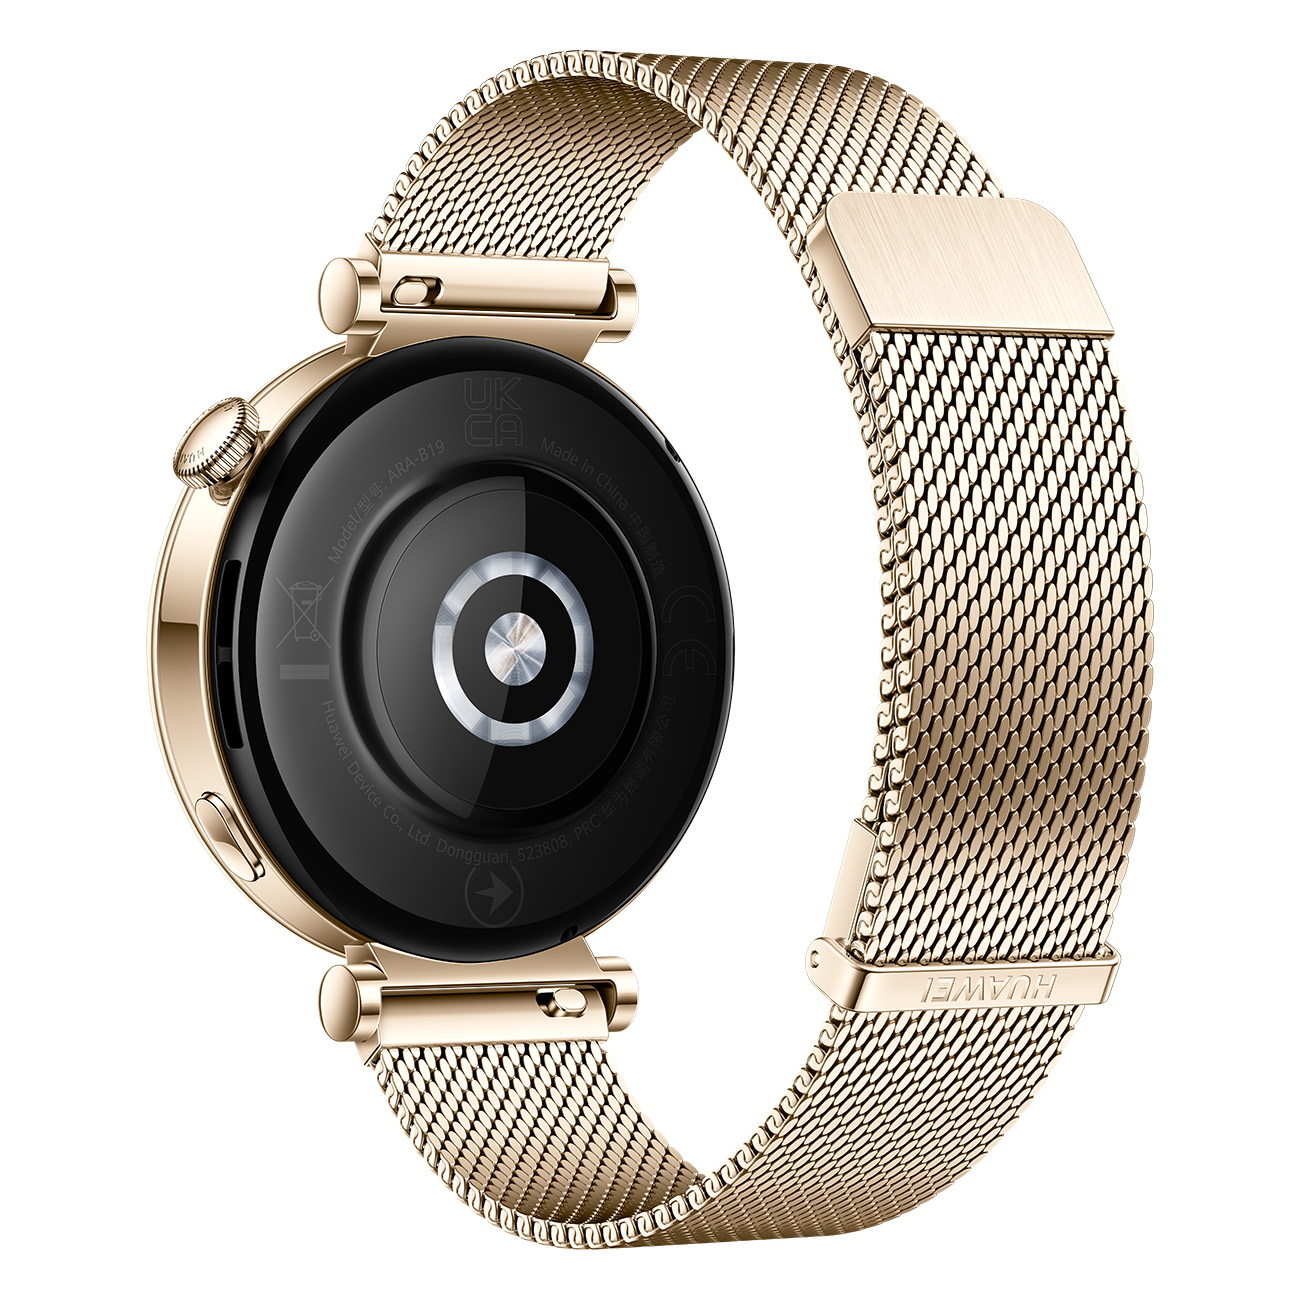 Edelstahl, gold GT4 Smartwatch Watch HUAWEI